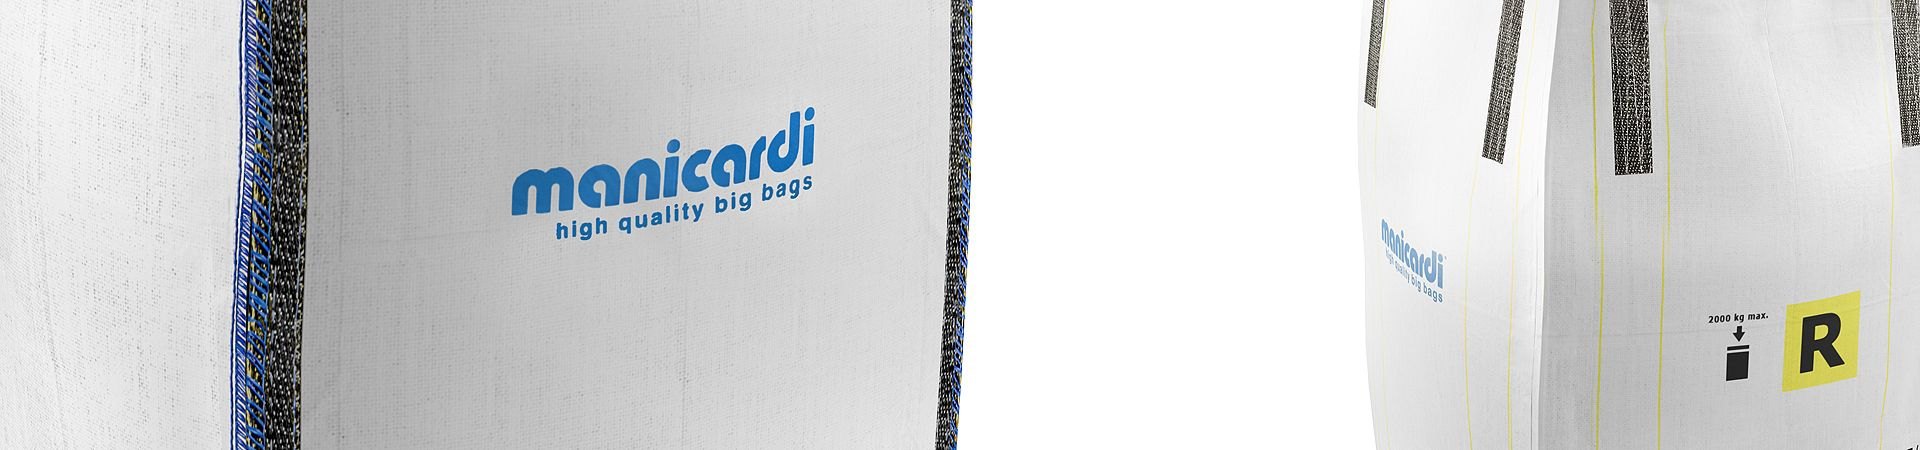 manicardi - hight quality big bags notre entreprise